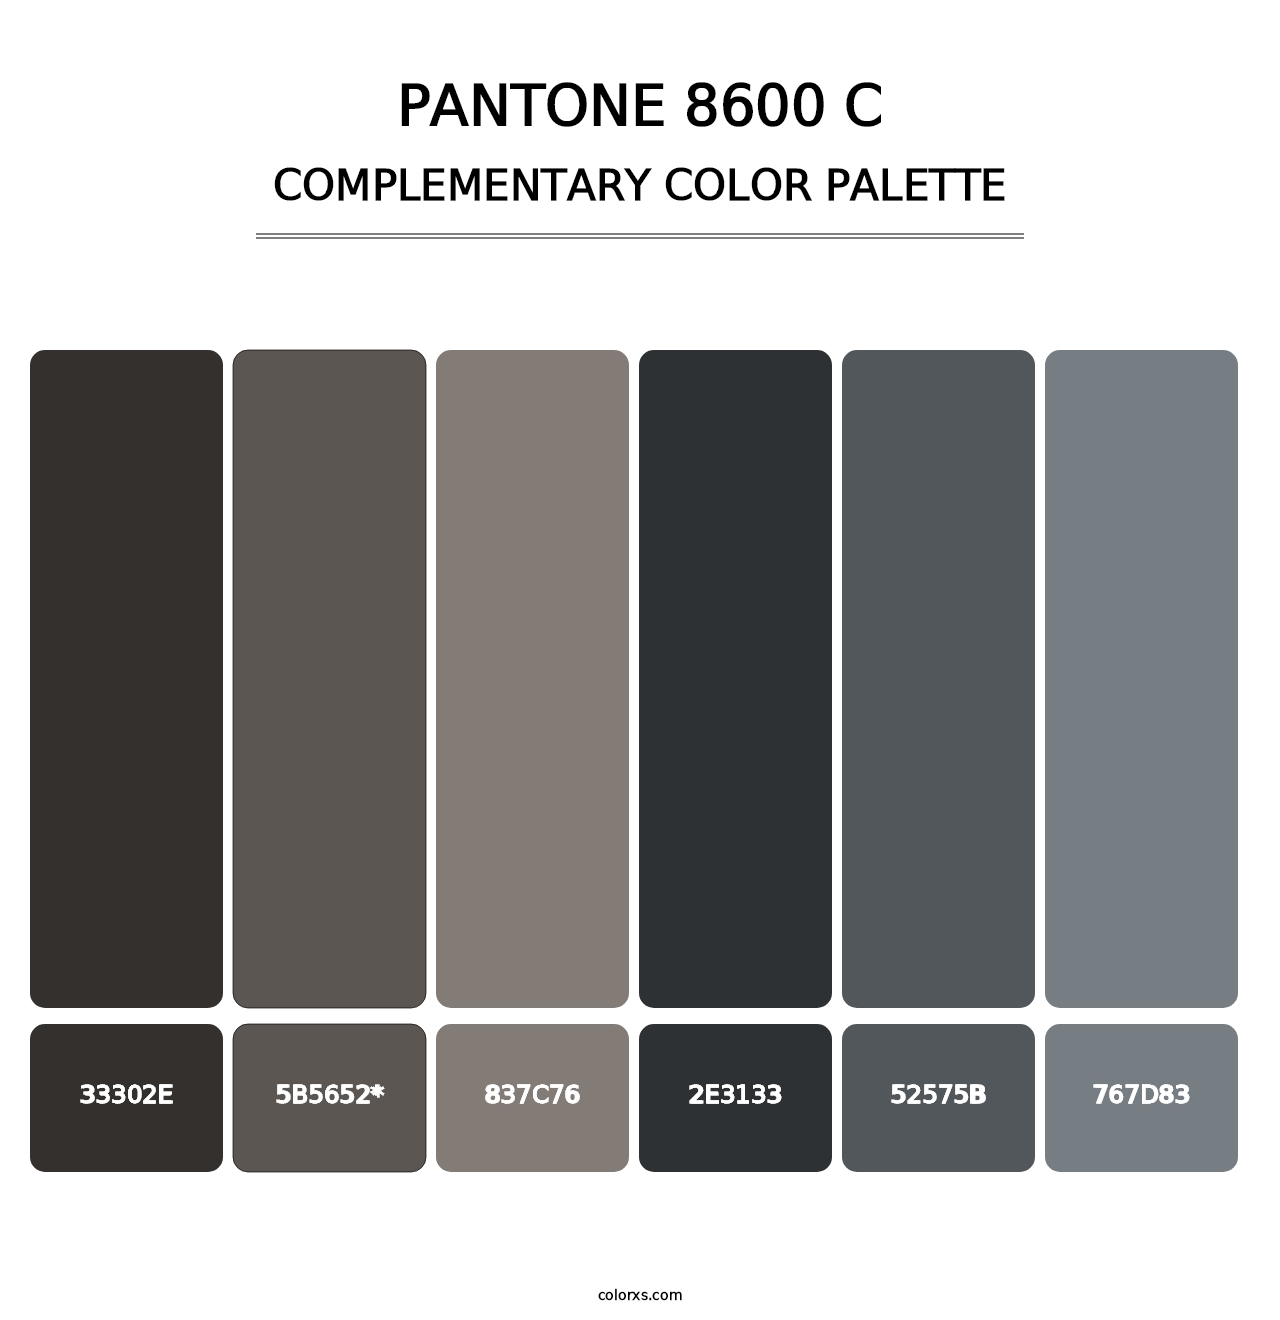 PANTONE 8600 C - Complementary Color Palette